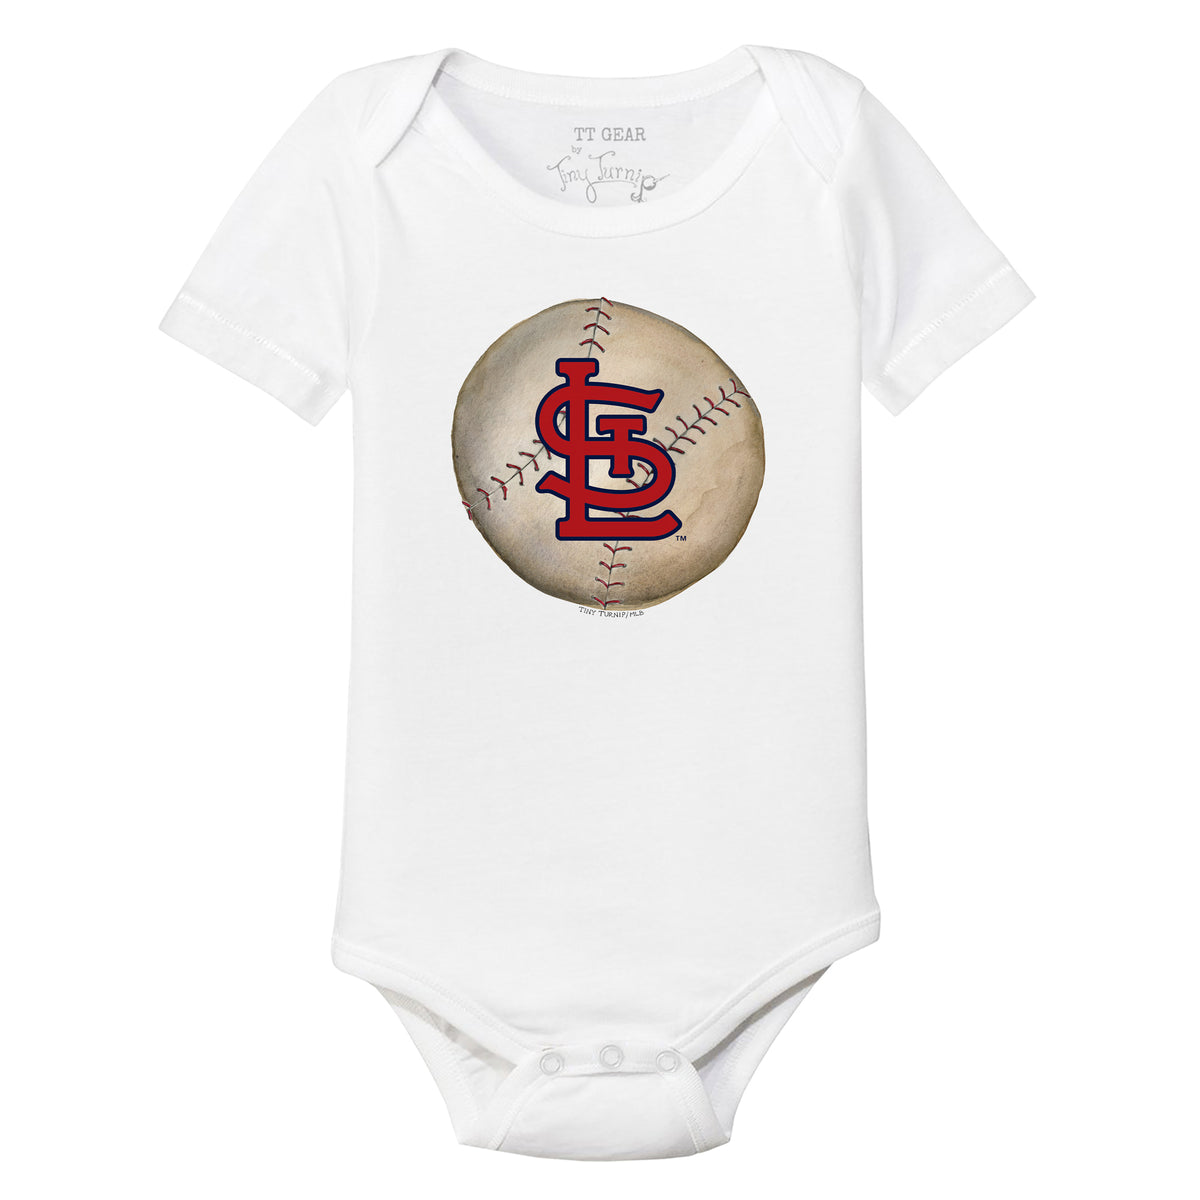 St. Louis Cardinals Baby / Infant / Toddler Gear - Detroit Game Gear